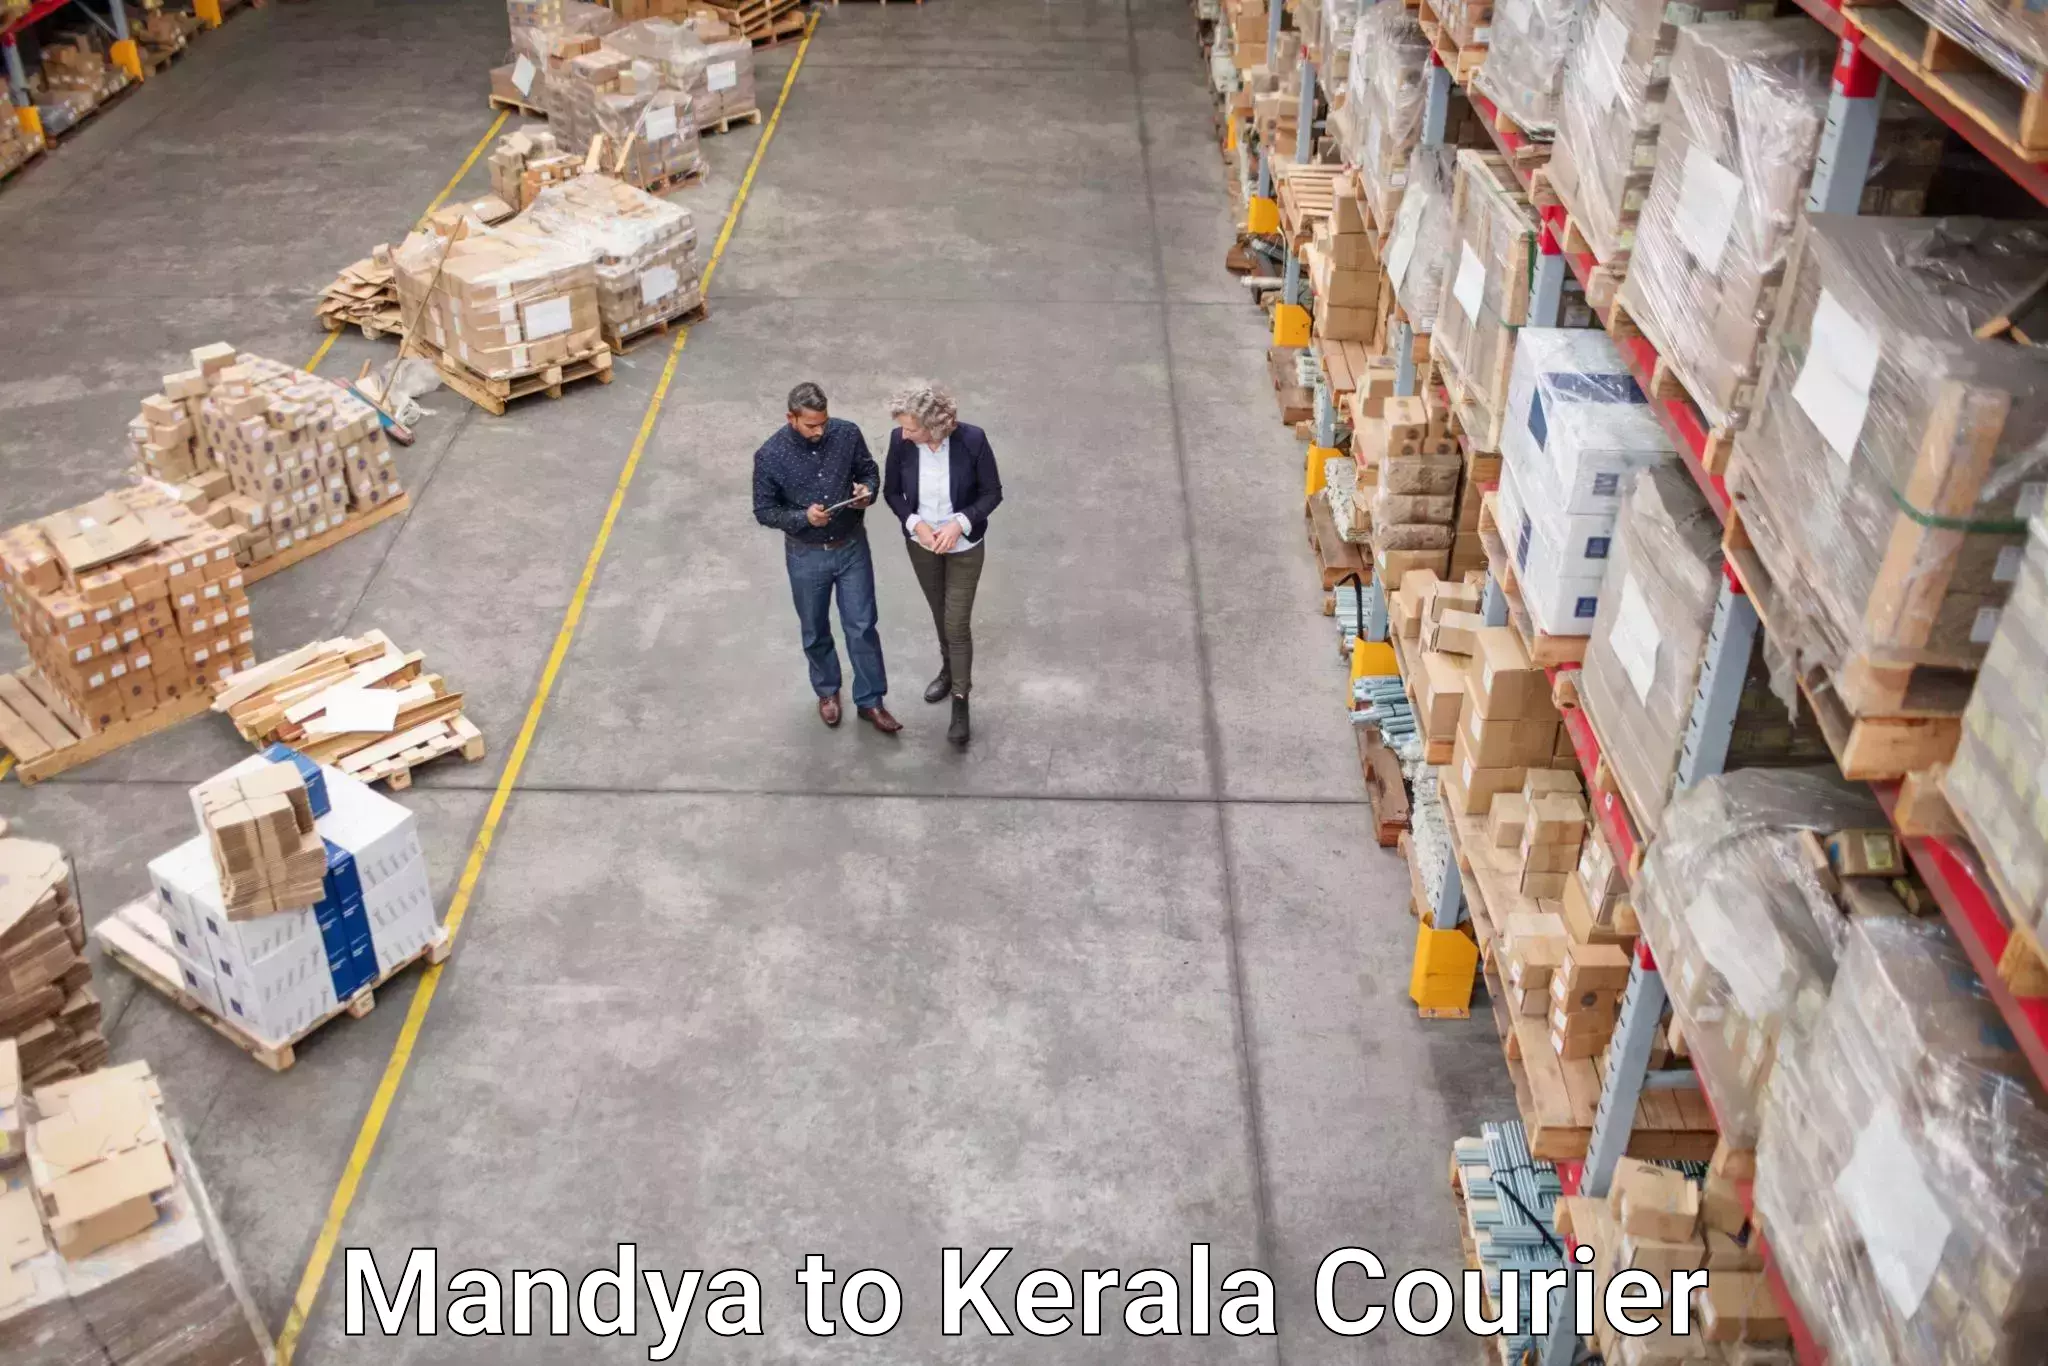 Reliable delivery network Mandya to Kattappana